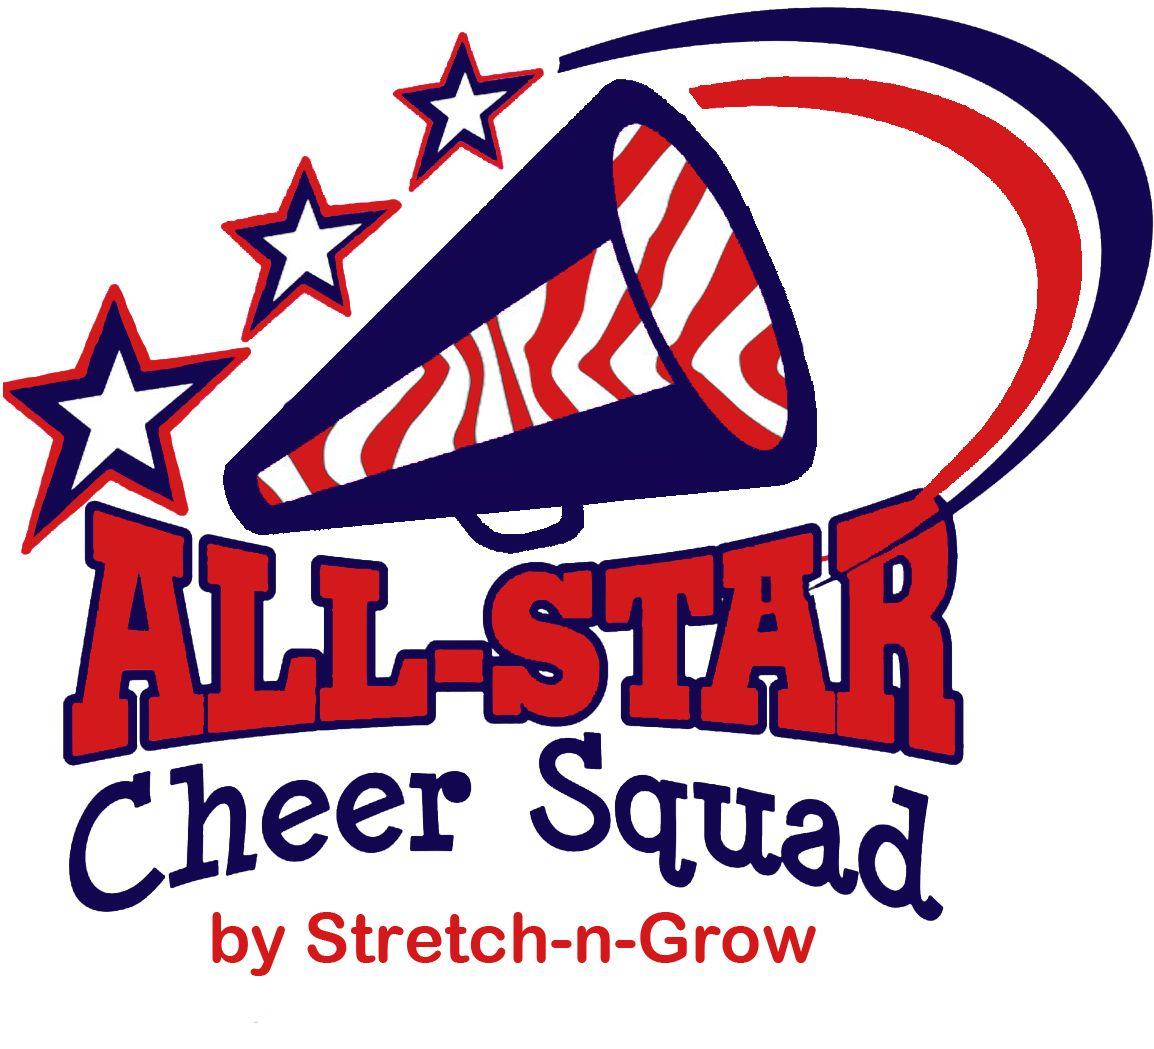 Cheer Logo - Cheerleader Logos